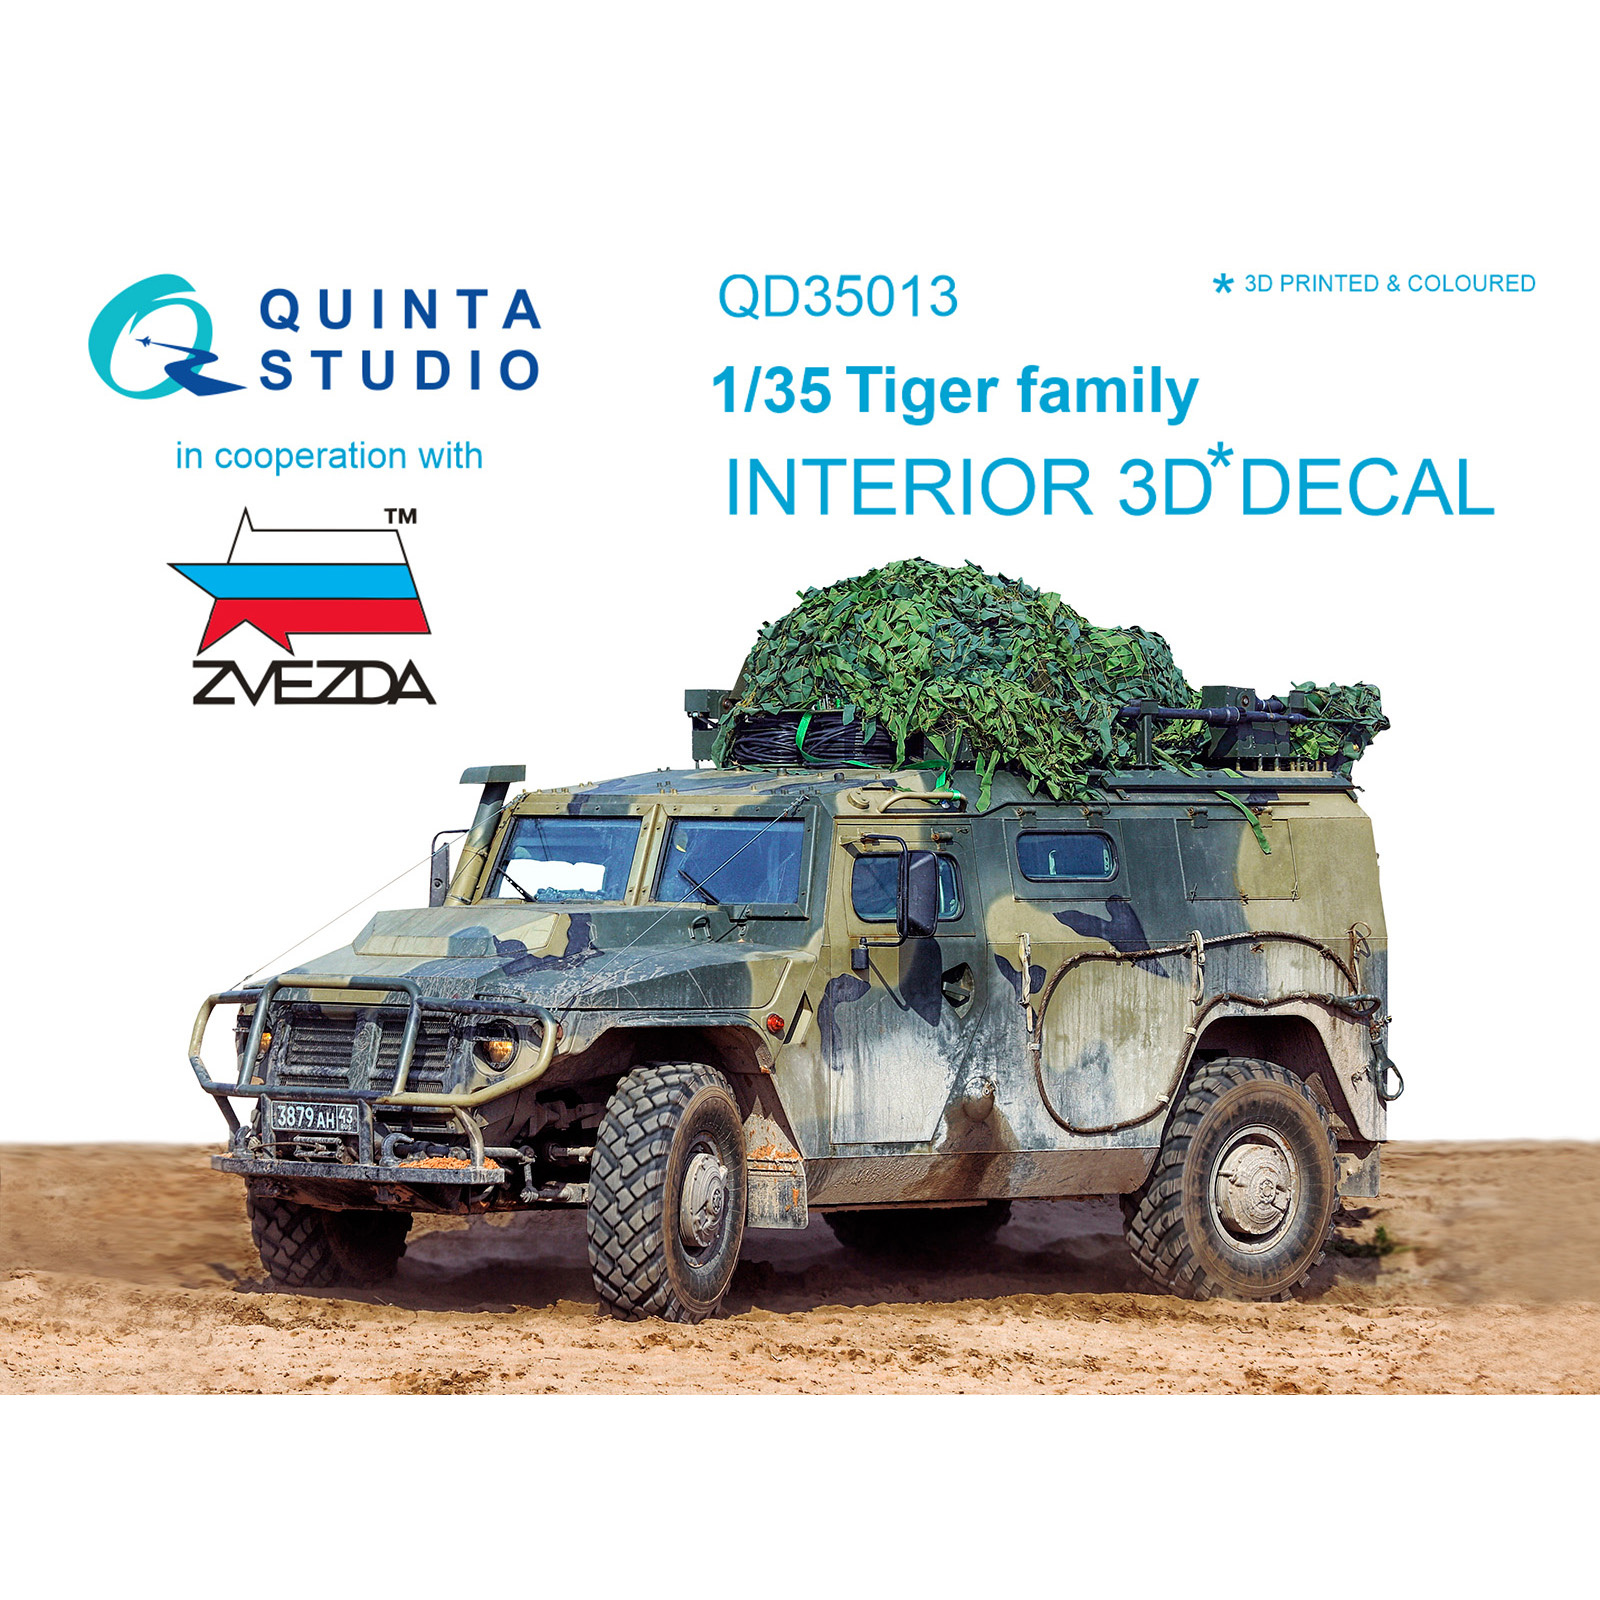 QD35013 Quinta Studio 1/35 3D Cabin Interior Decal for Tiger Family (Zvezda)